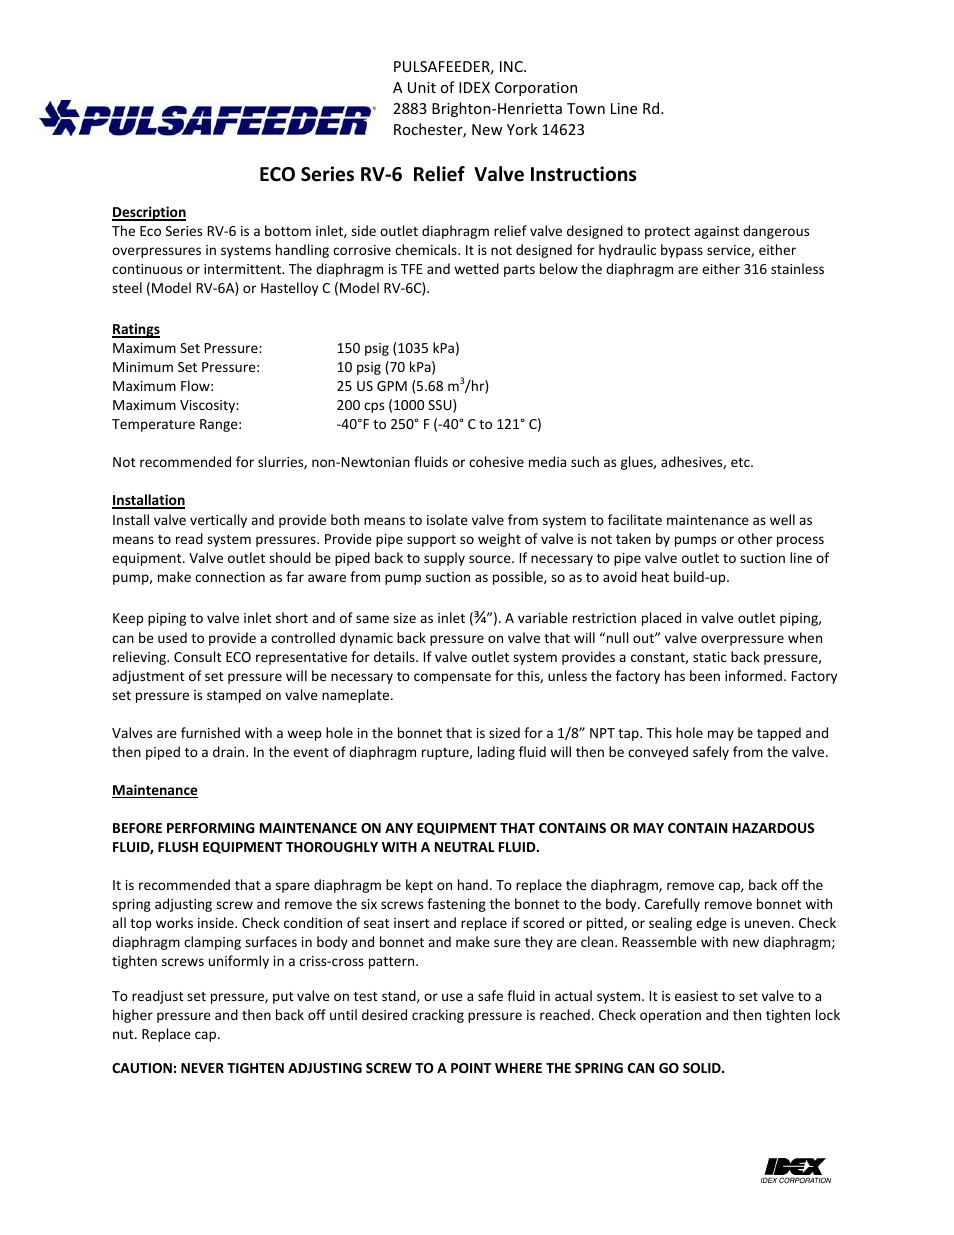 ECO Series Relief Valve Instructions